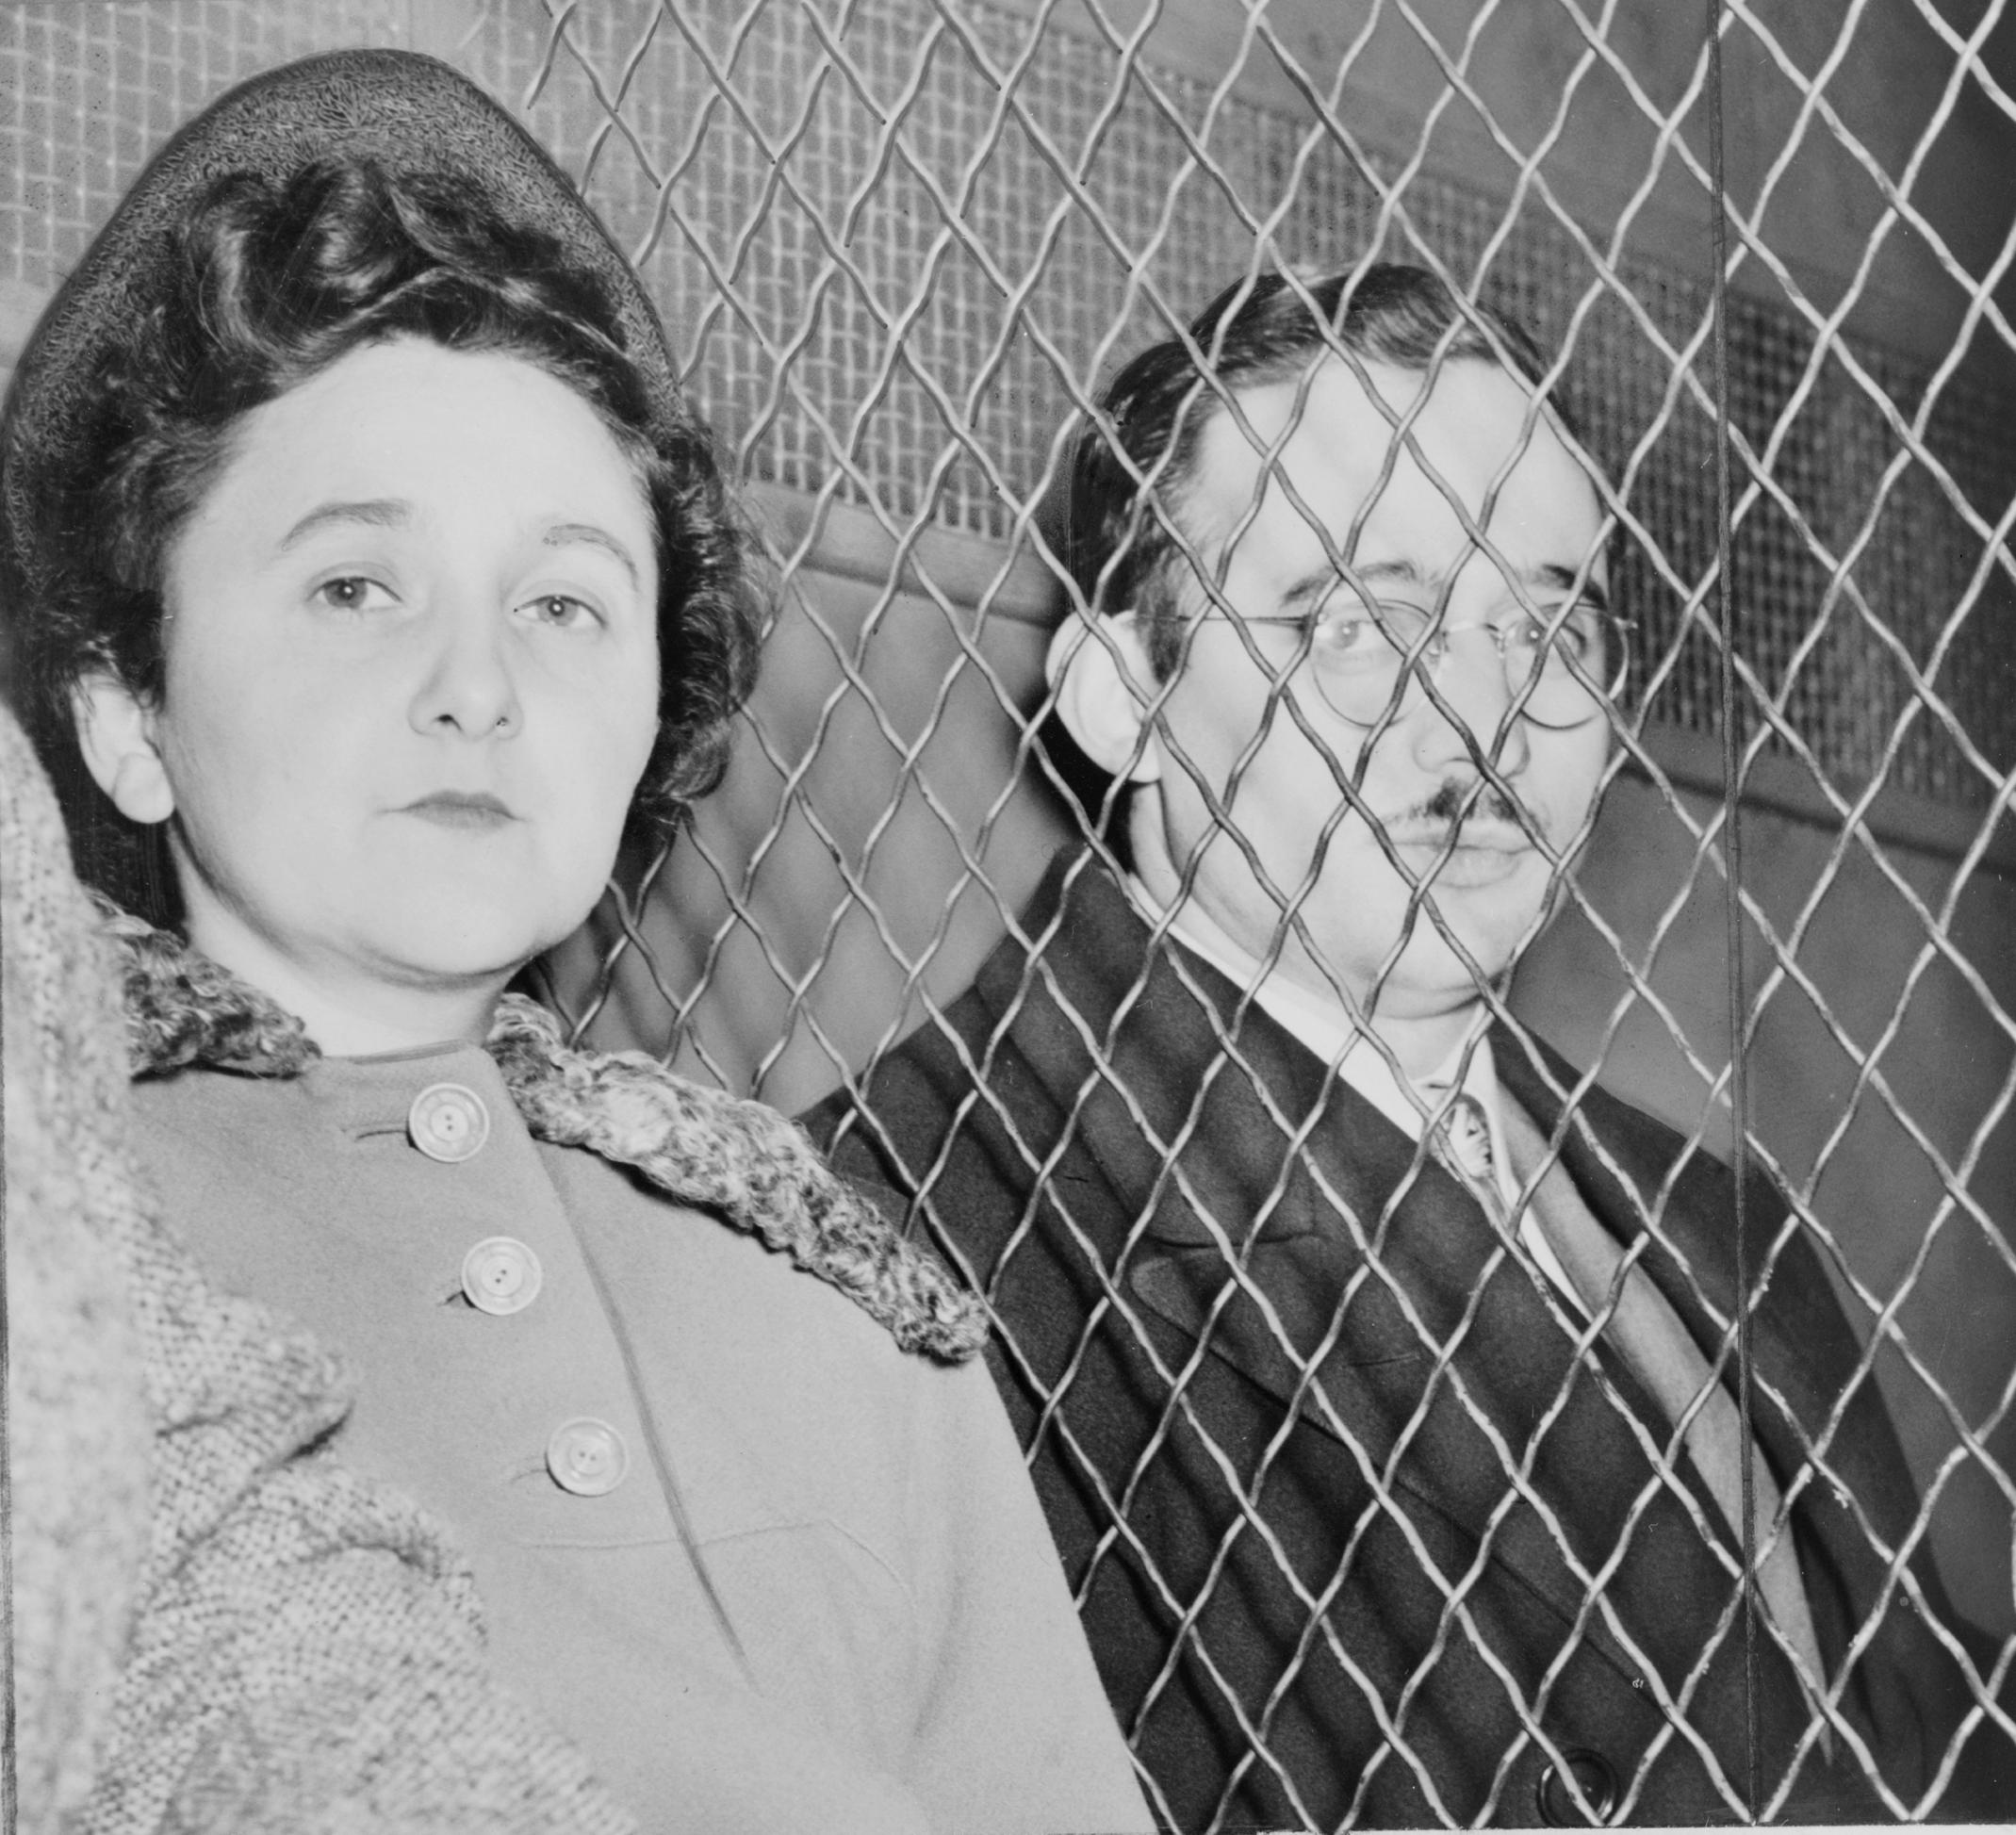 Rosenberg Treason Trial